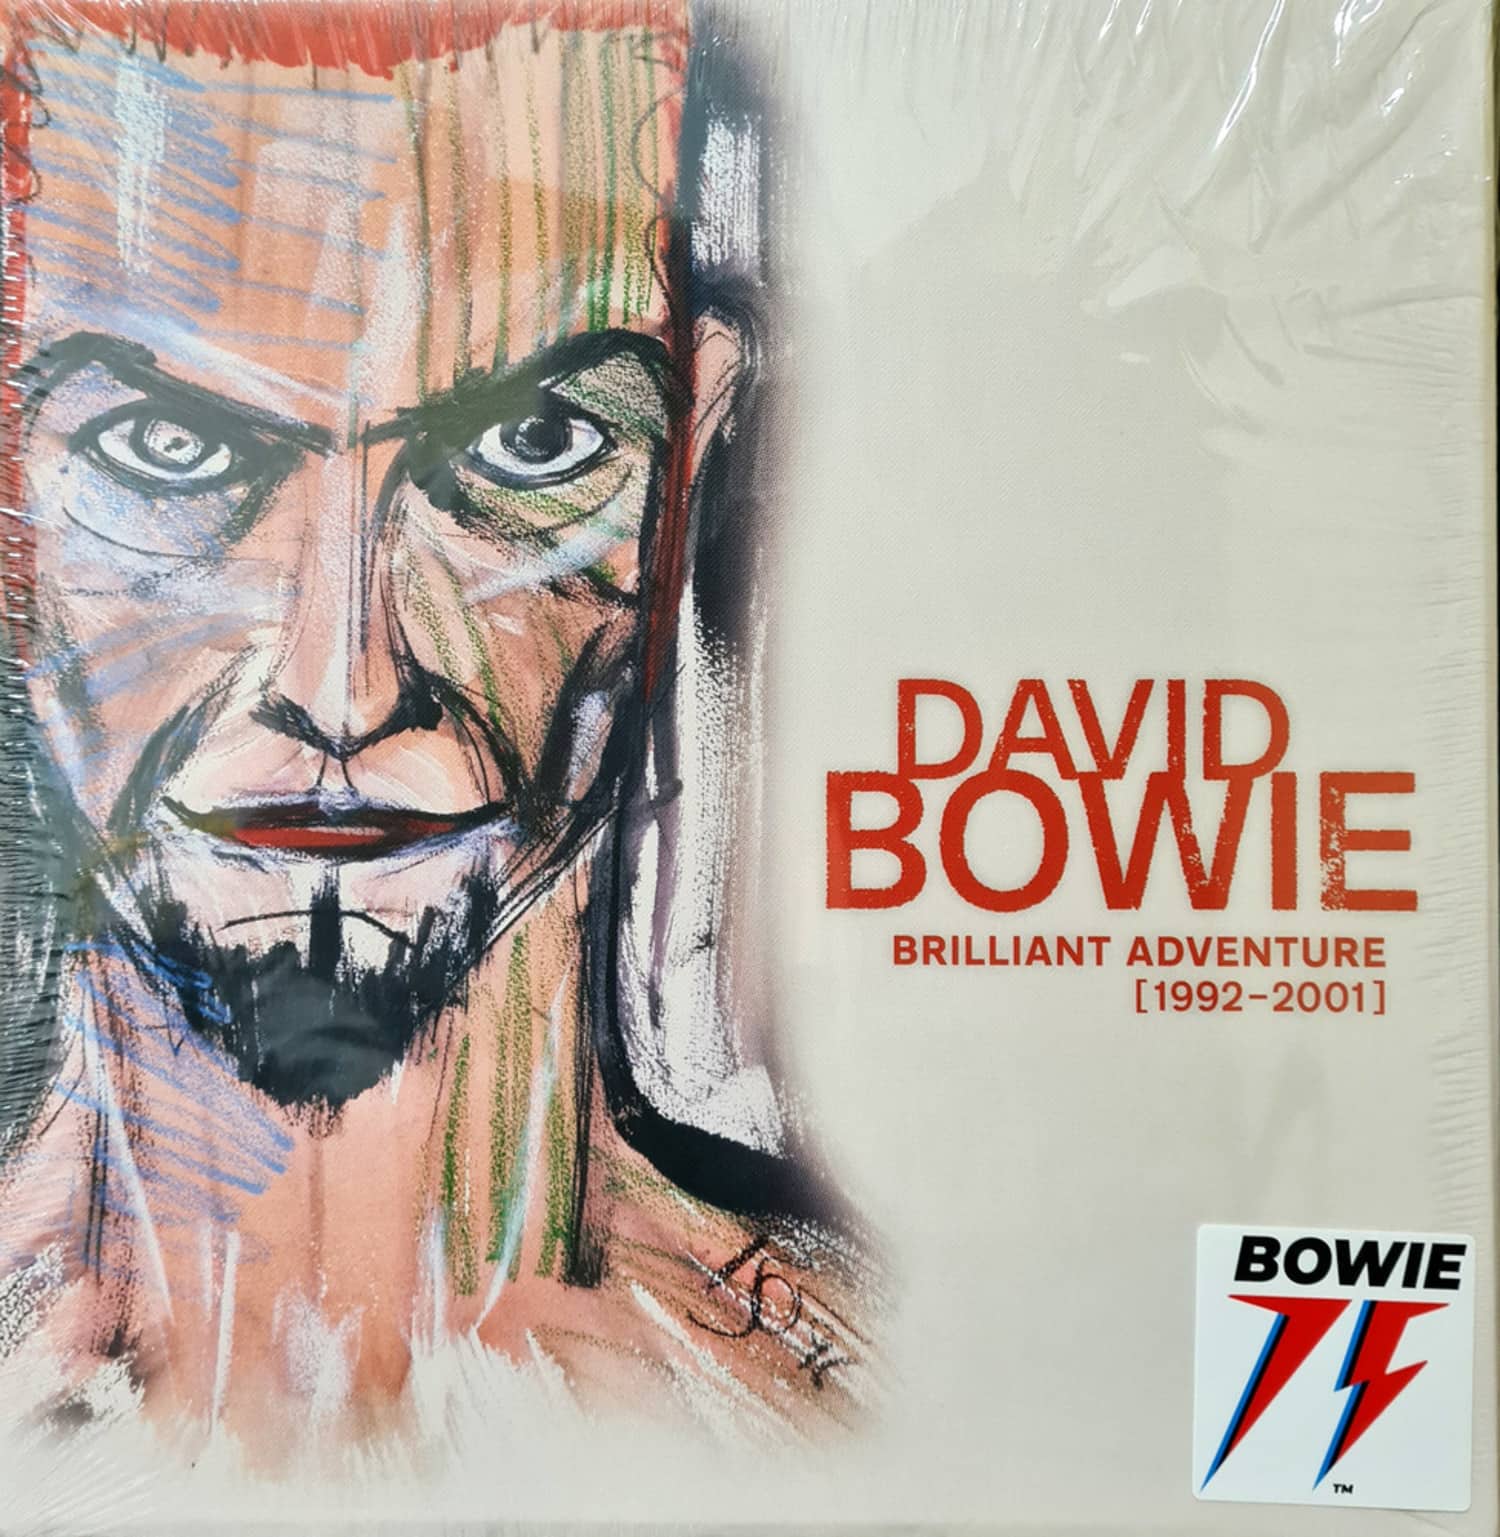 David Bowie - BRILLIANT ADVENTURE 